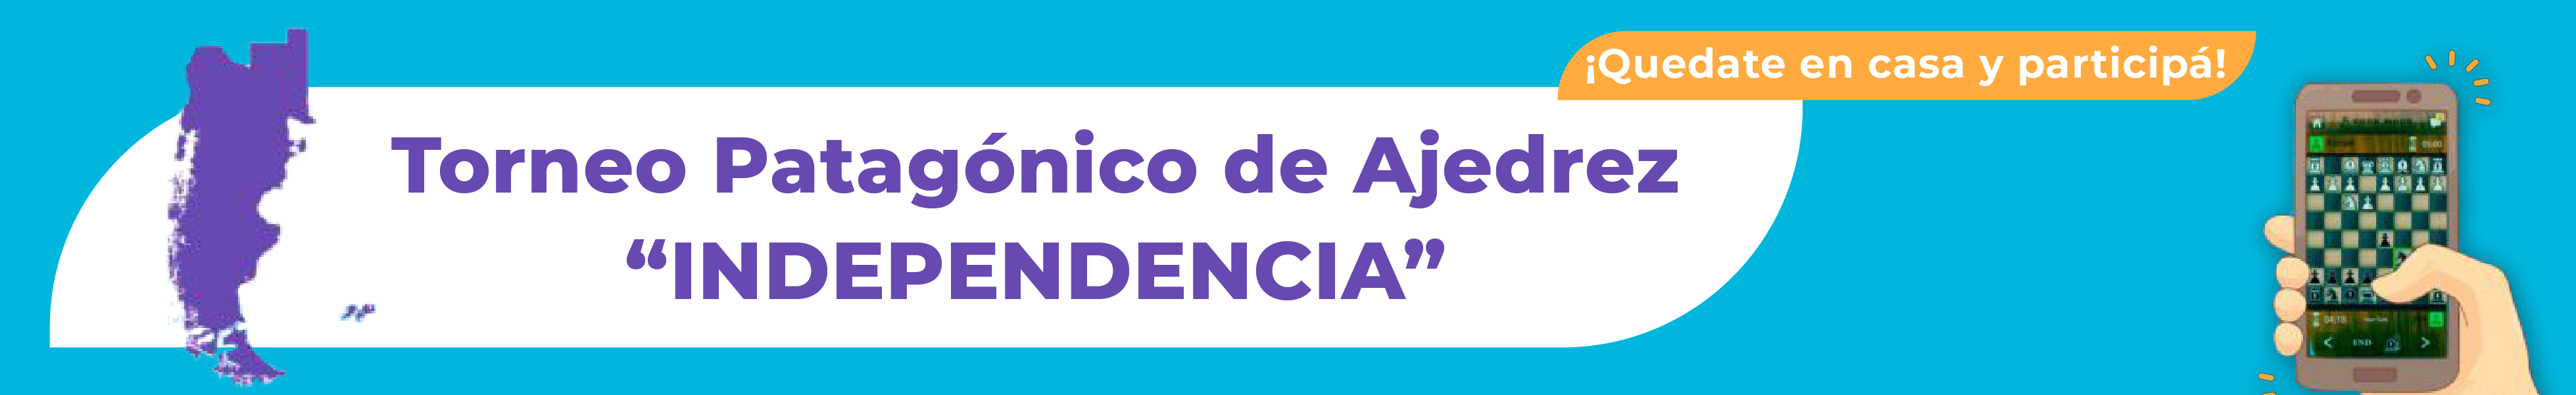 Banner-Torneo-Patagonico-de-Ajedrez